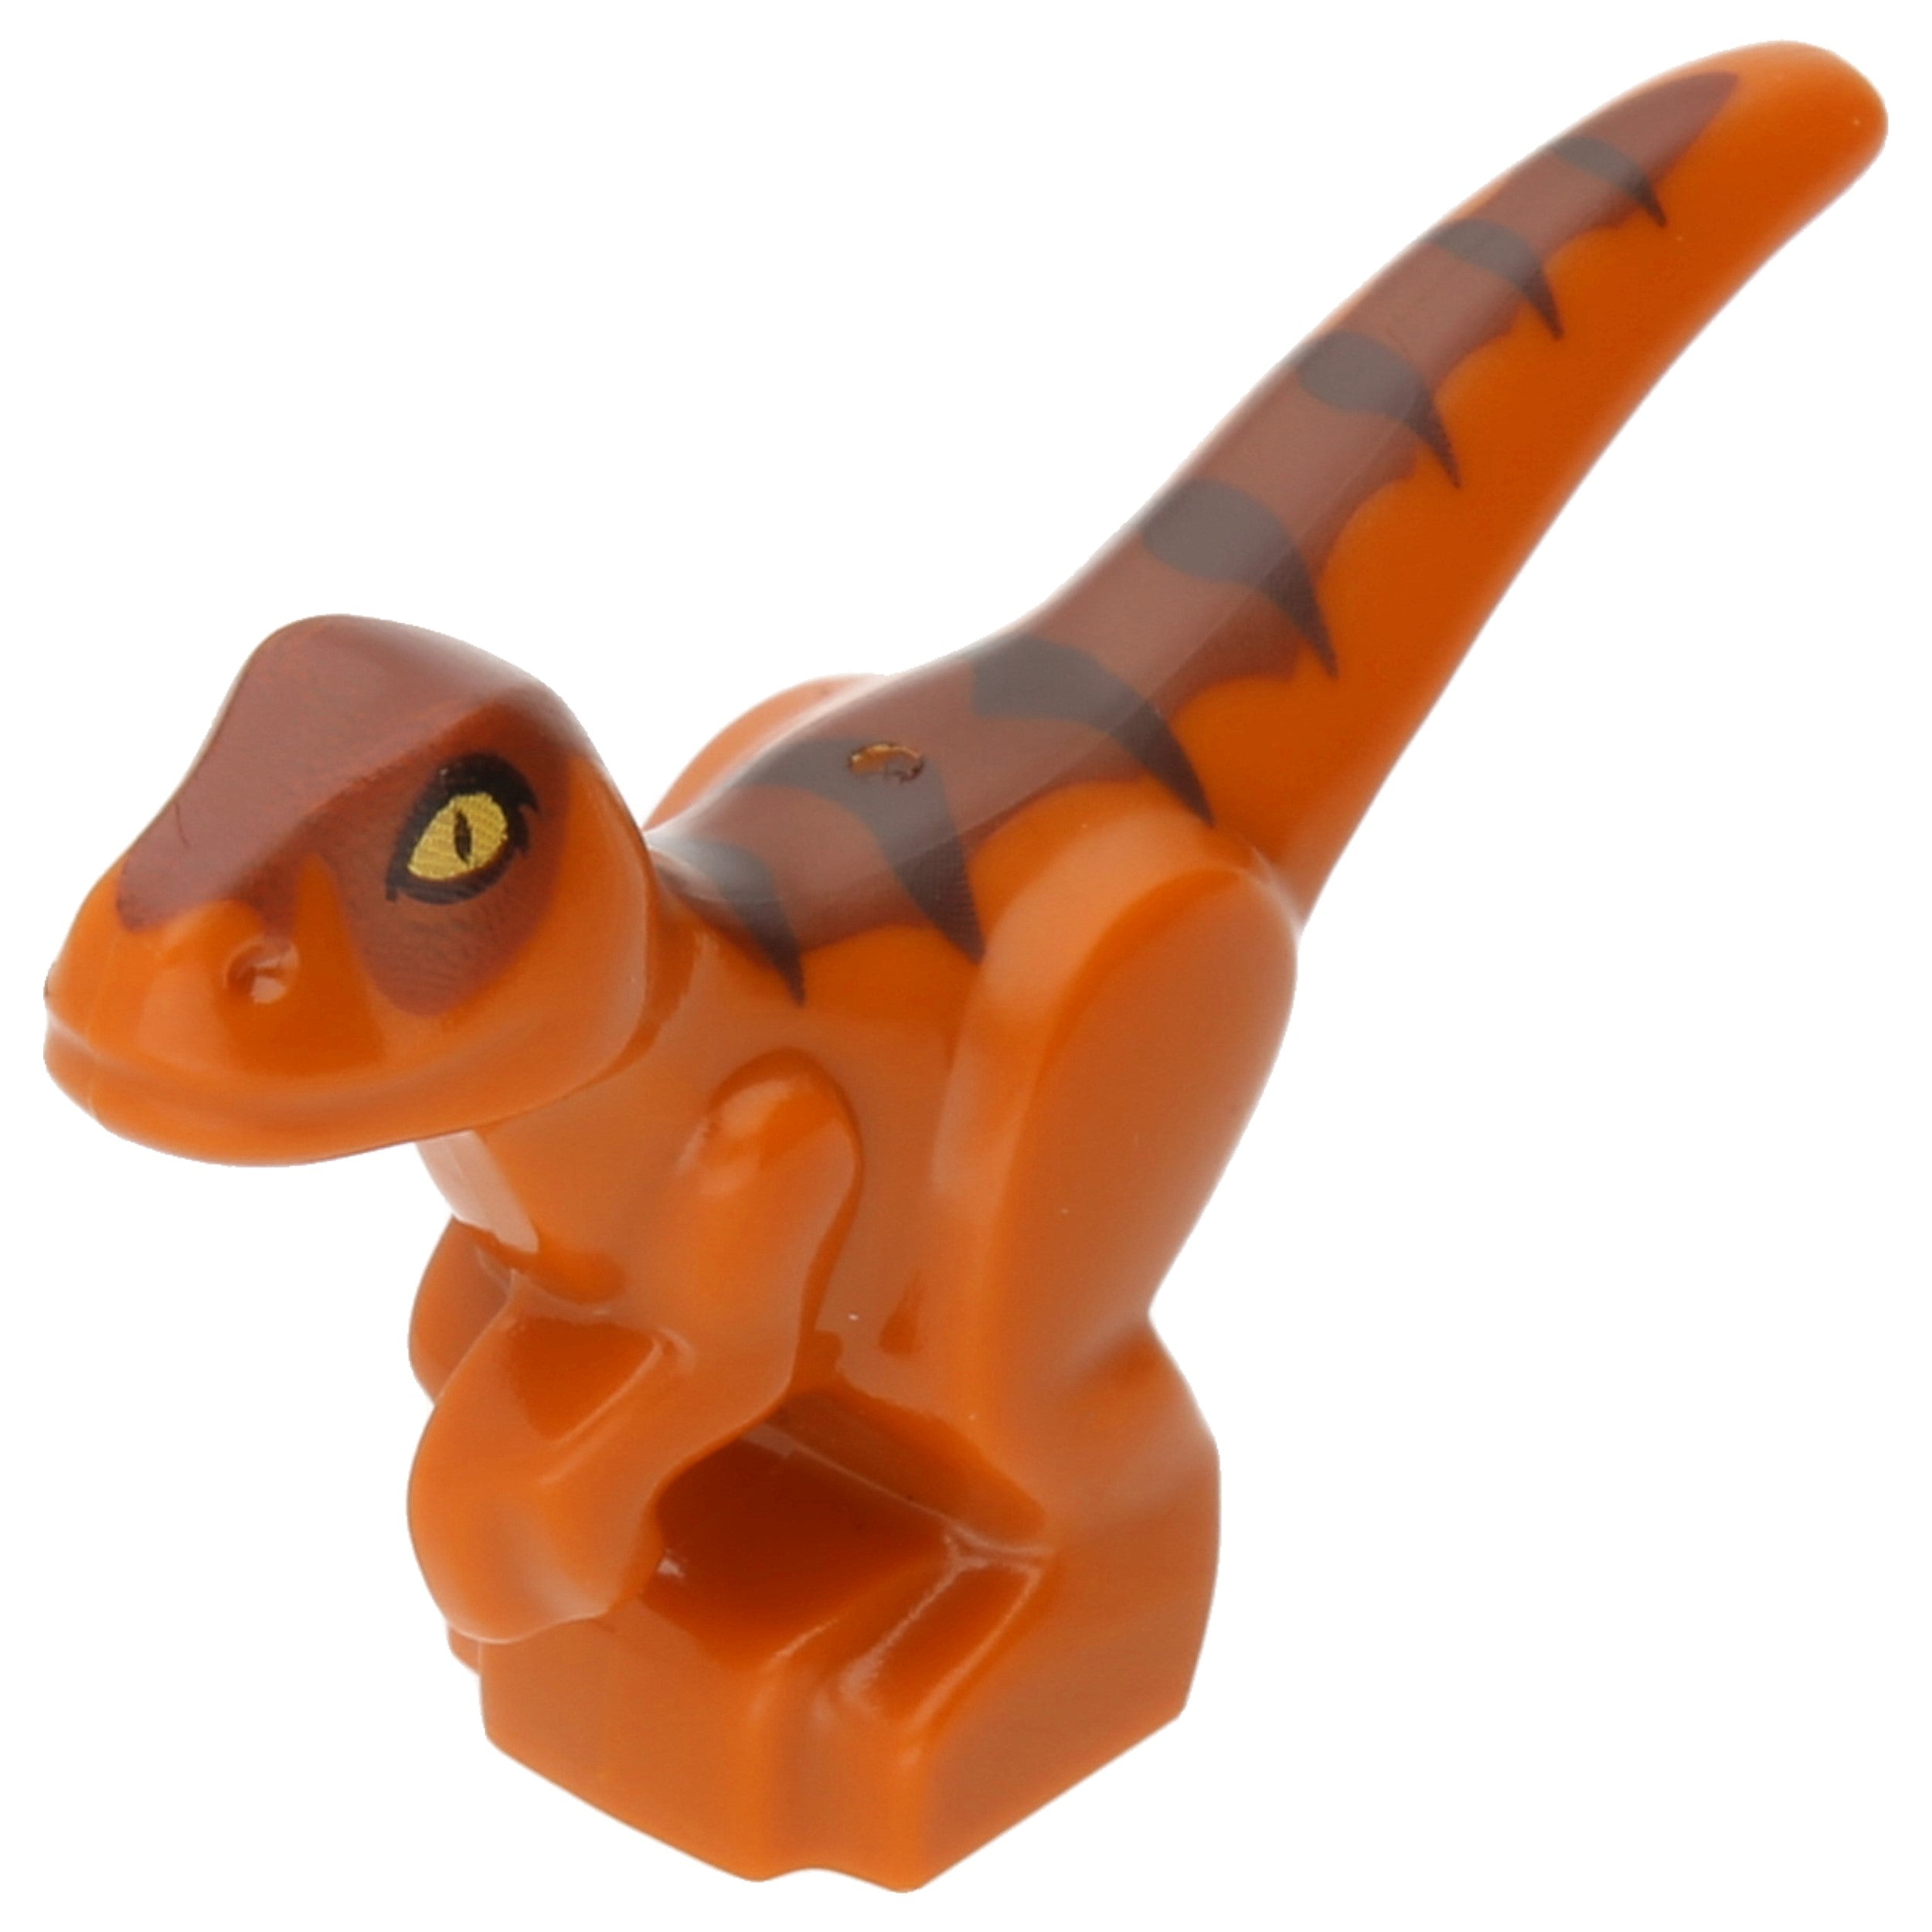 LEGO reptiles/ dinos/ kite - dinosaur baby with dark brown stripes and yellow eyes